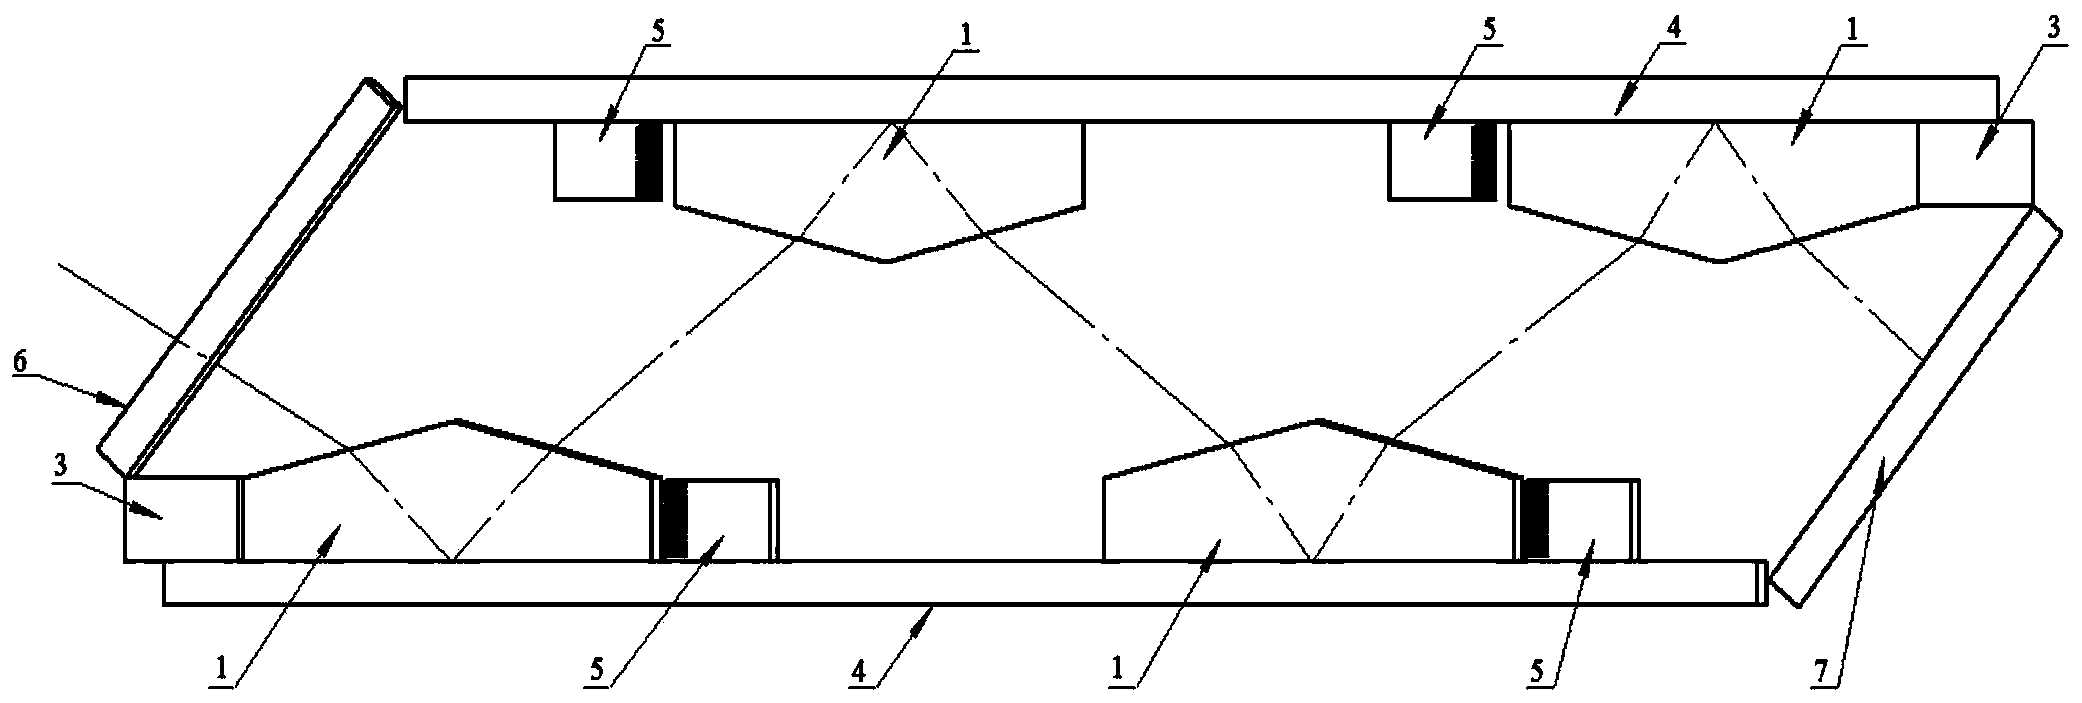 Reflection type sheet laser amplifier of ridge structure